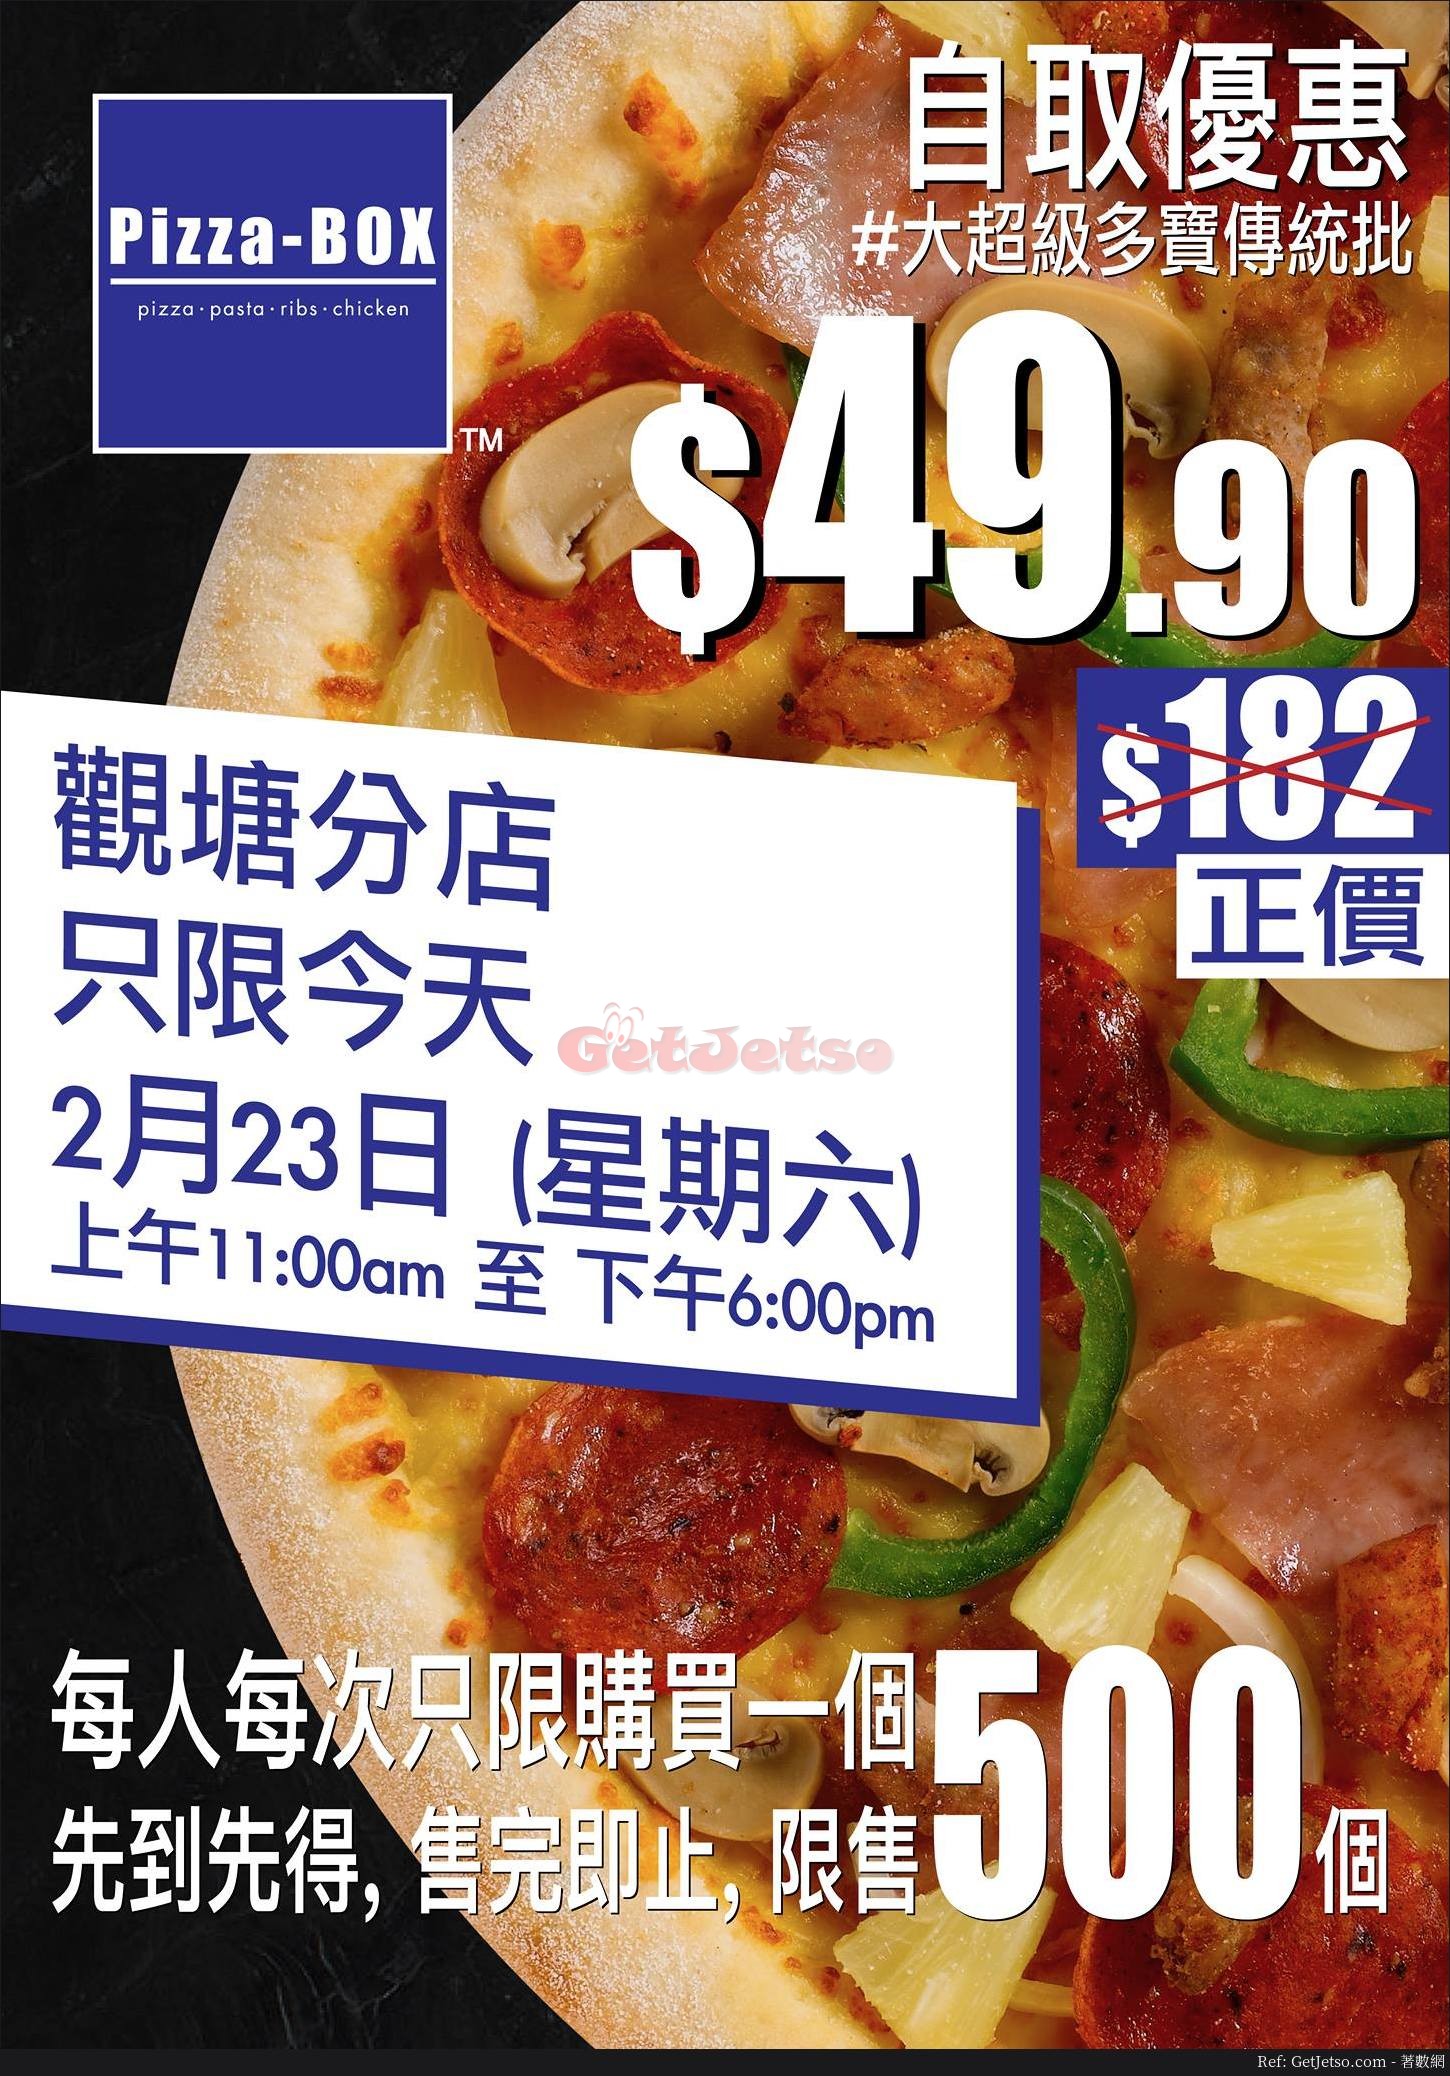 Pizza-BOX 大超級多寶傳統批.90外賣自取優惠@觀塘店(19年2月23日)圖片1